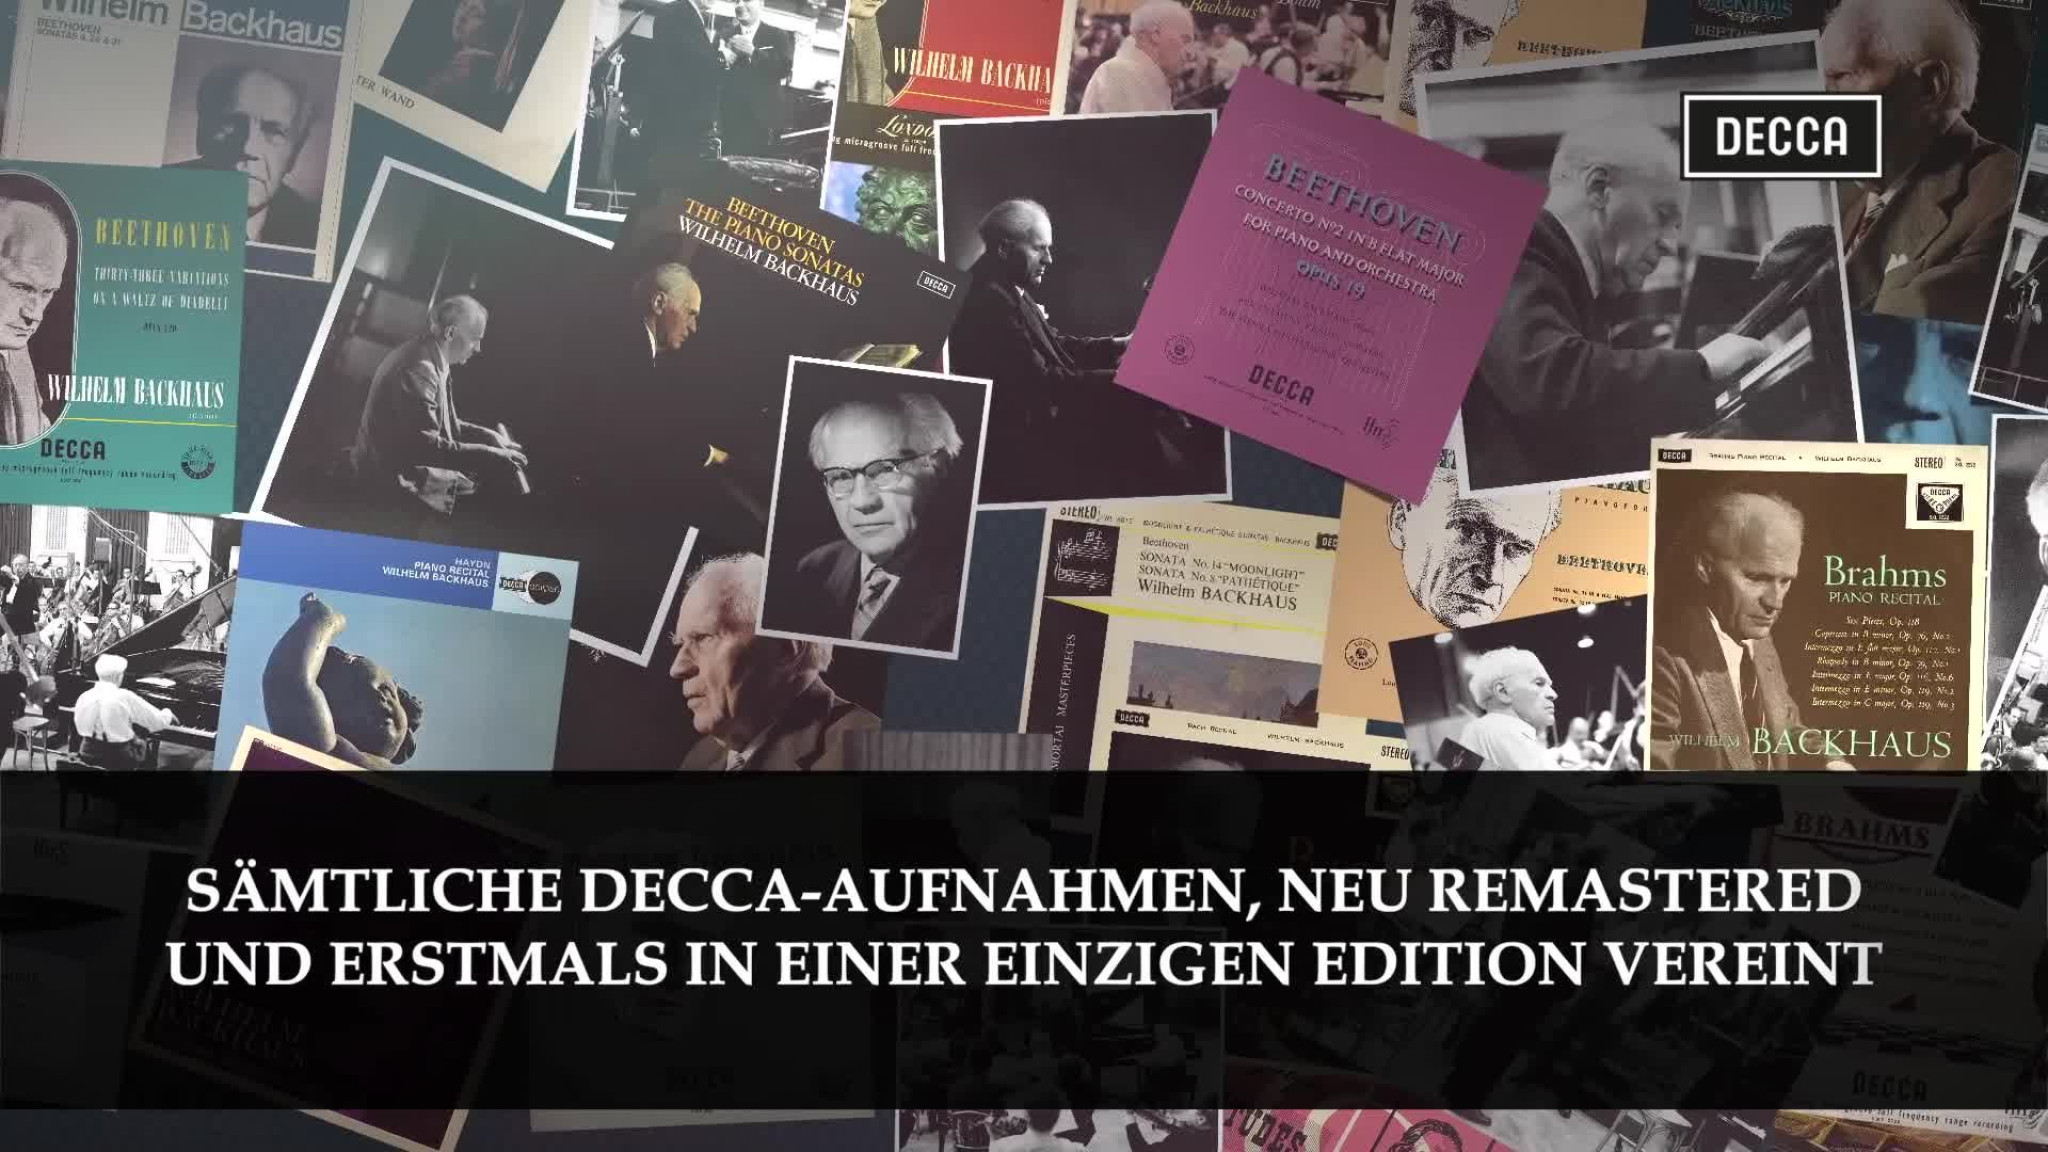 Wilhelm Backhaus - The Complete Decca Edition